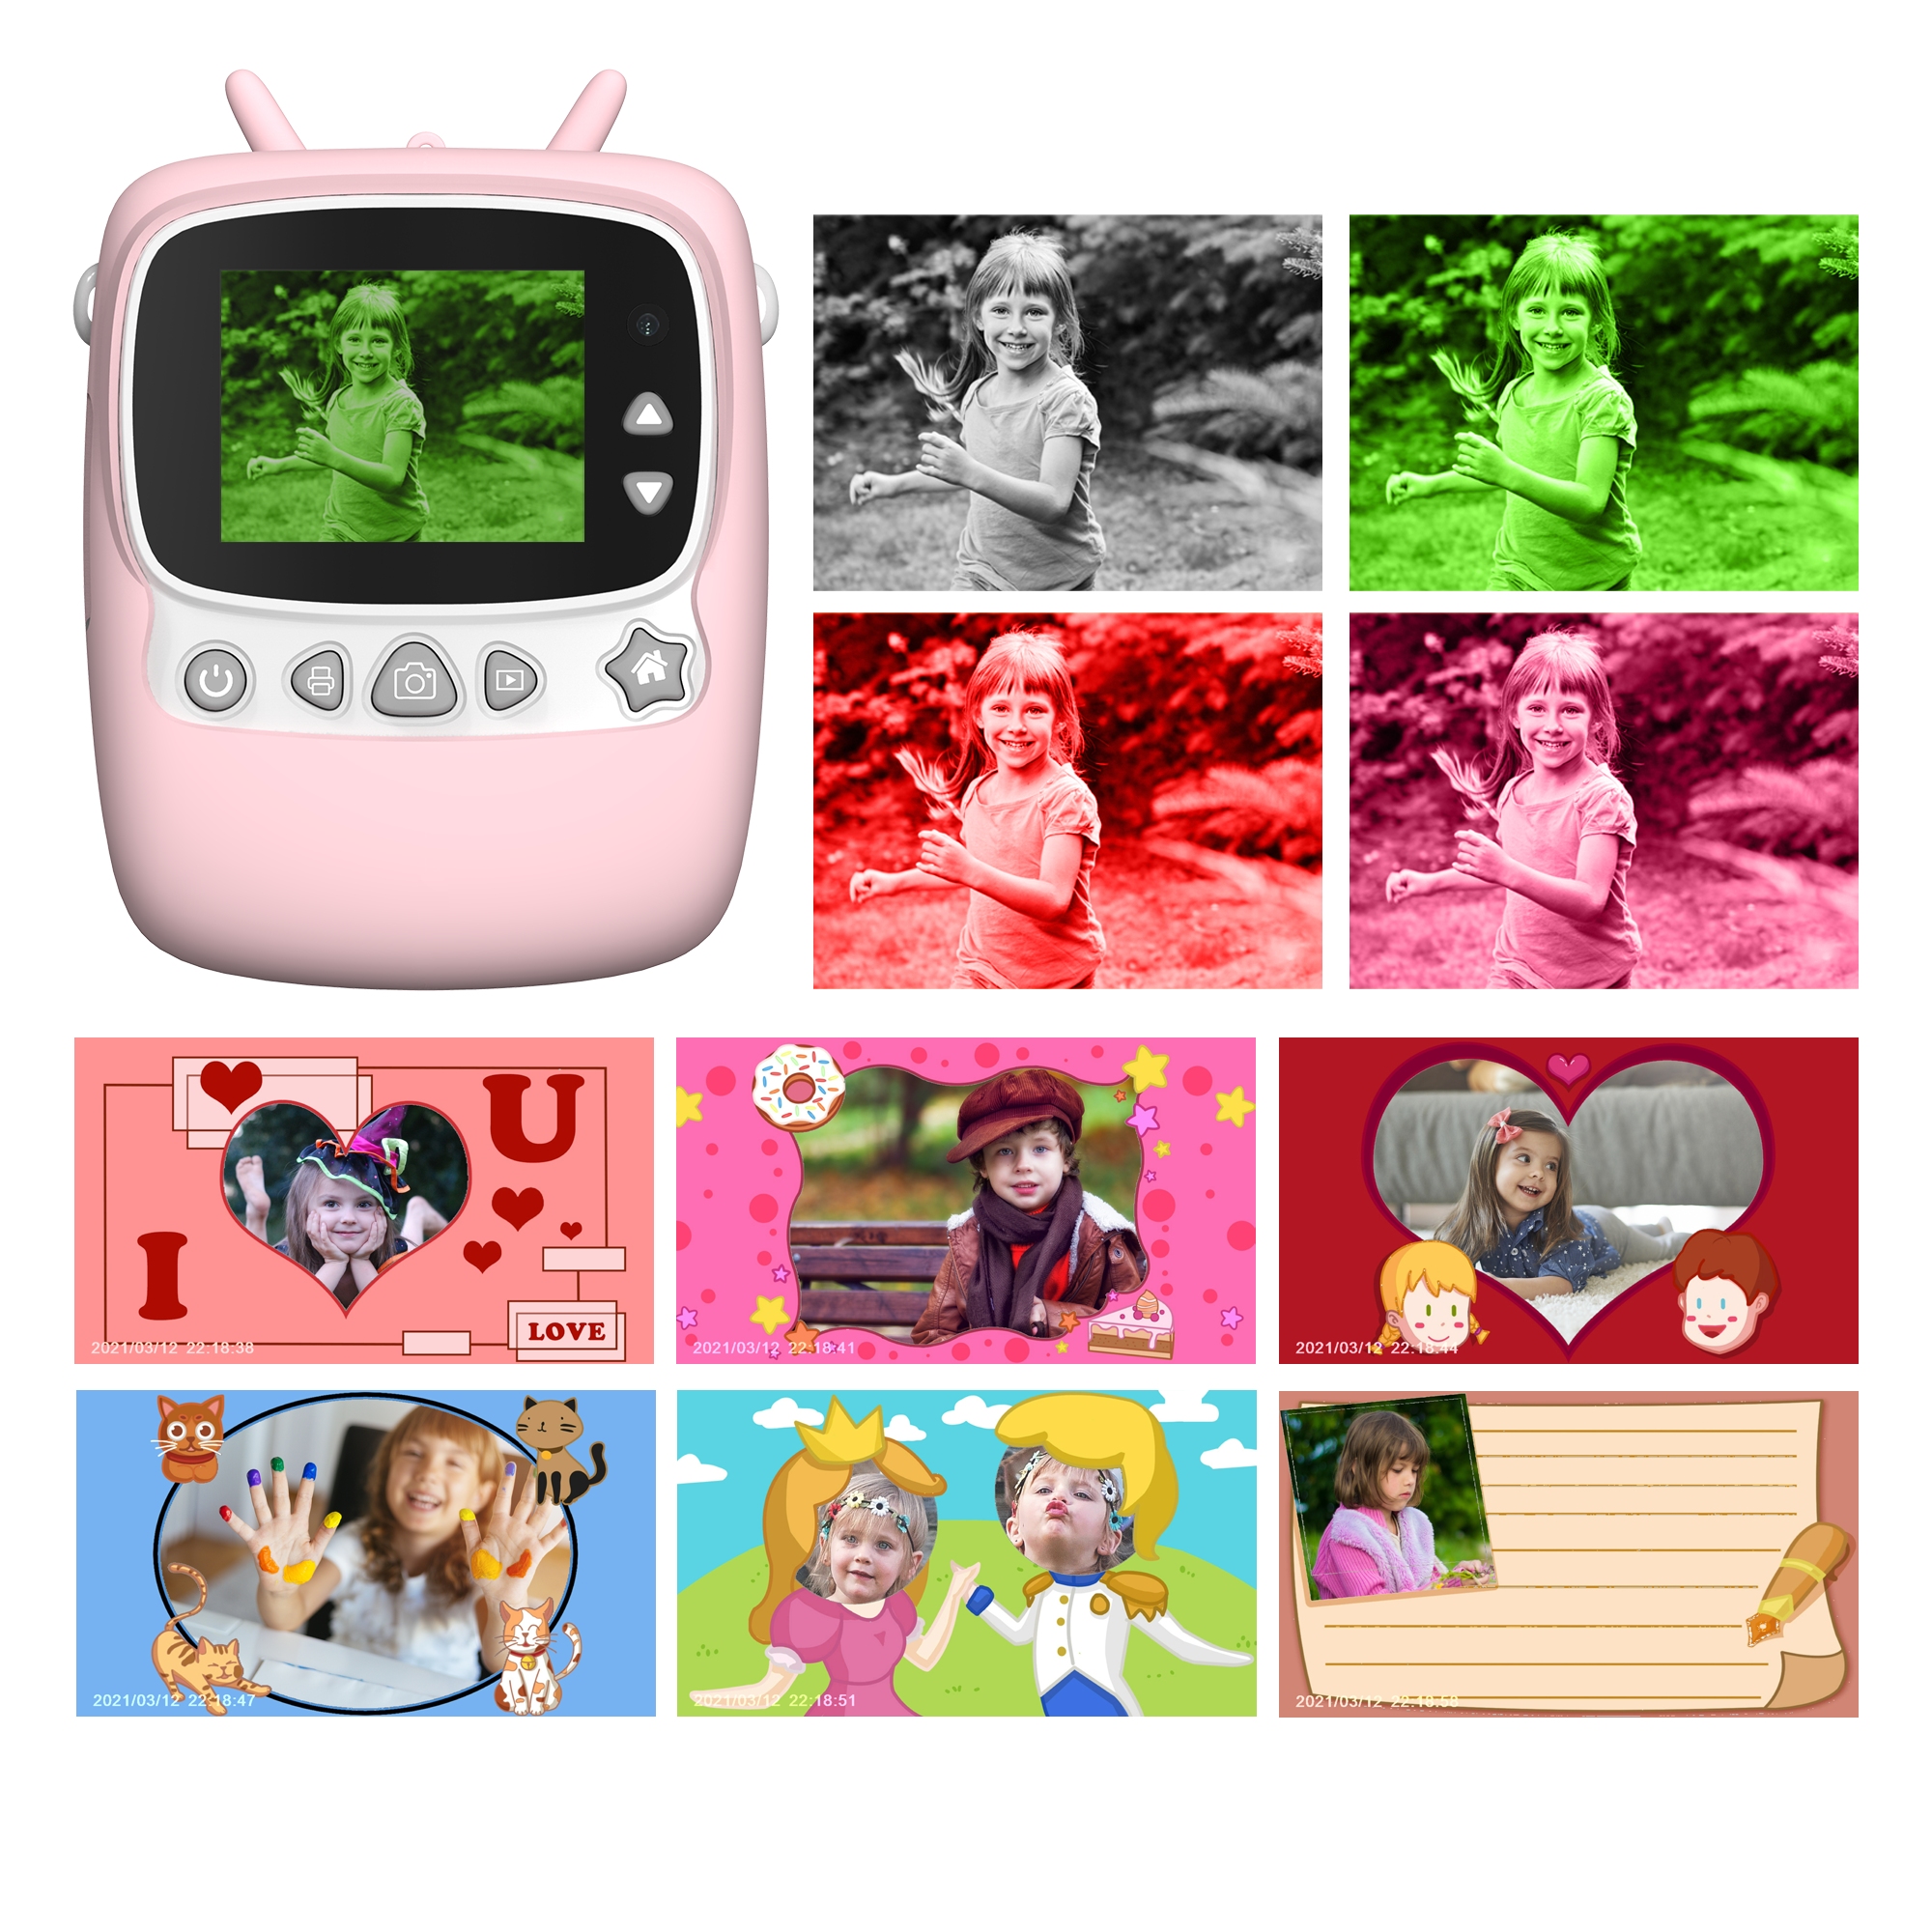 PRO Sofortbildkamera, FINE Pink LIFE infantil niños para Cámara de juguete creativa,Cámara